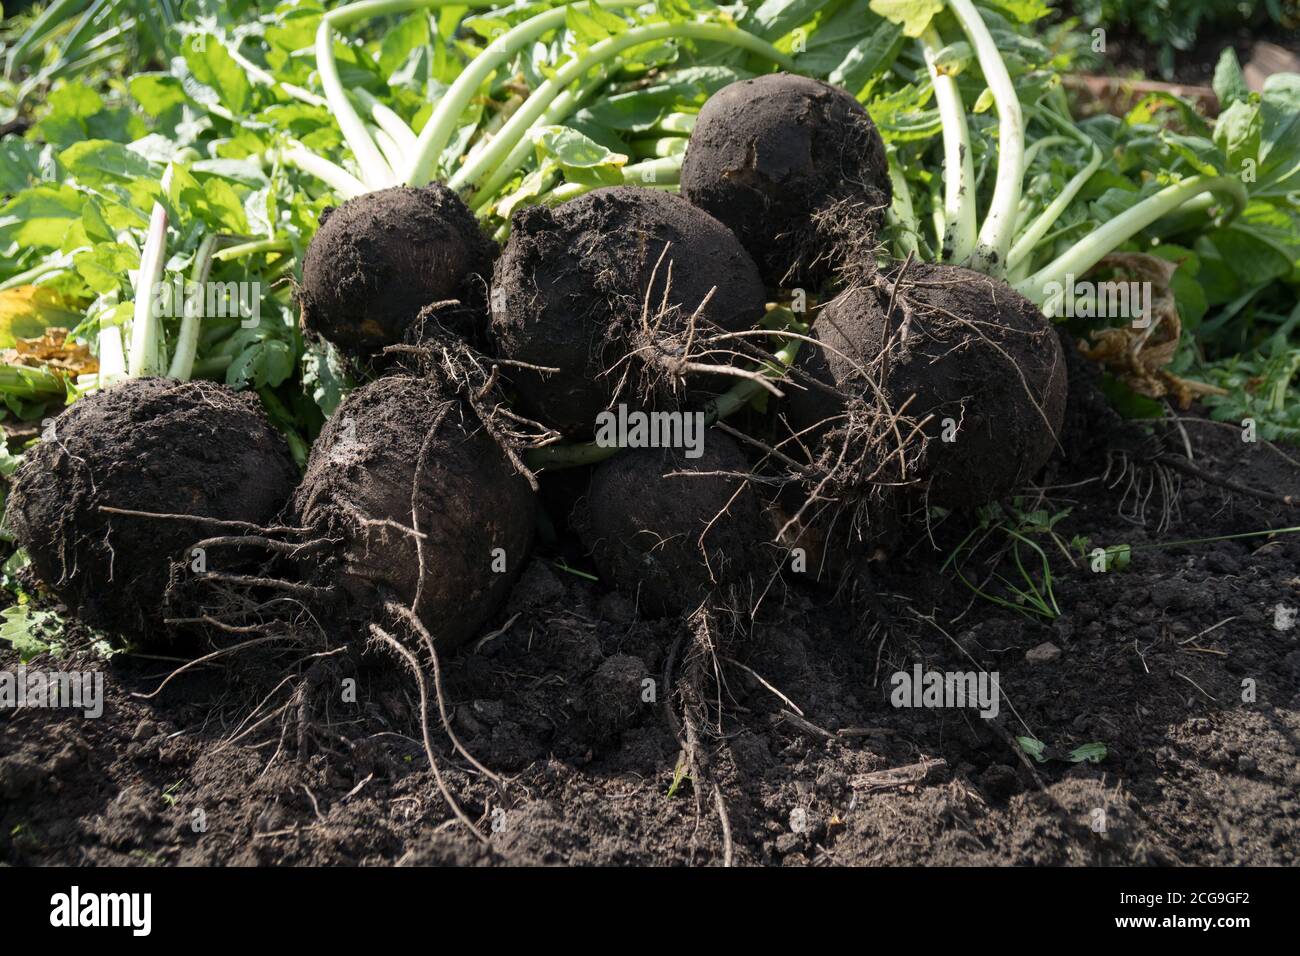 Black sowing radish (lat. Raphanus sativus) lies on the ground during harvesting. Stock Photo